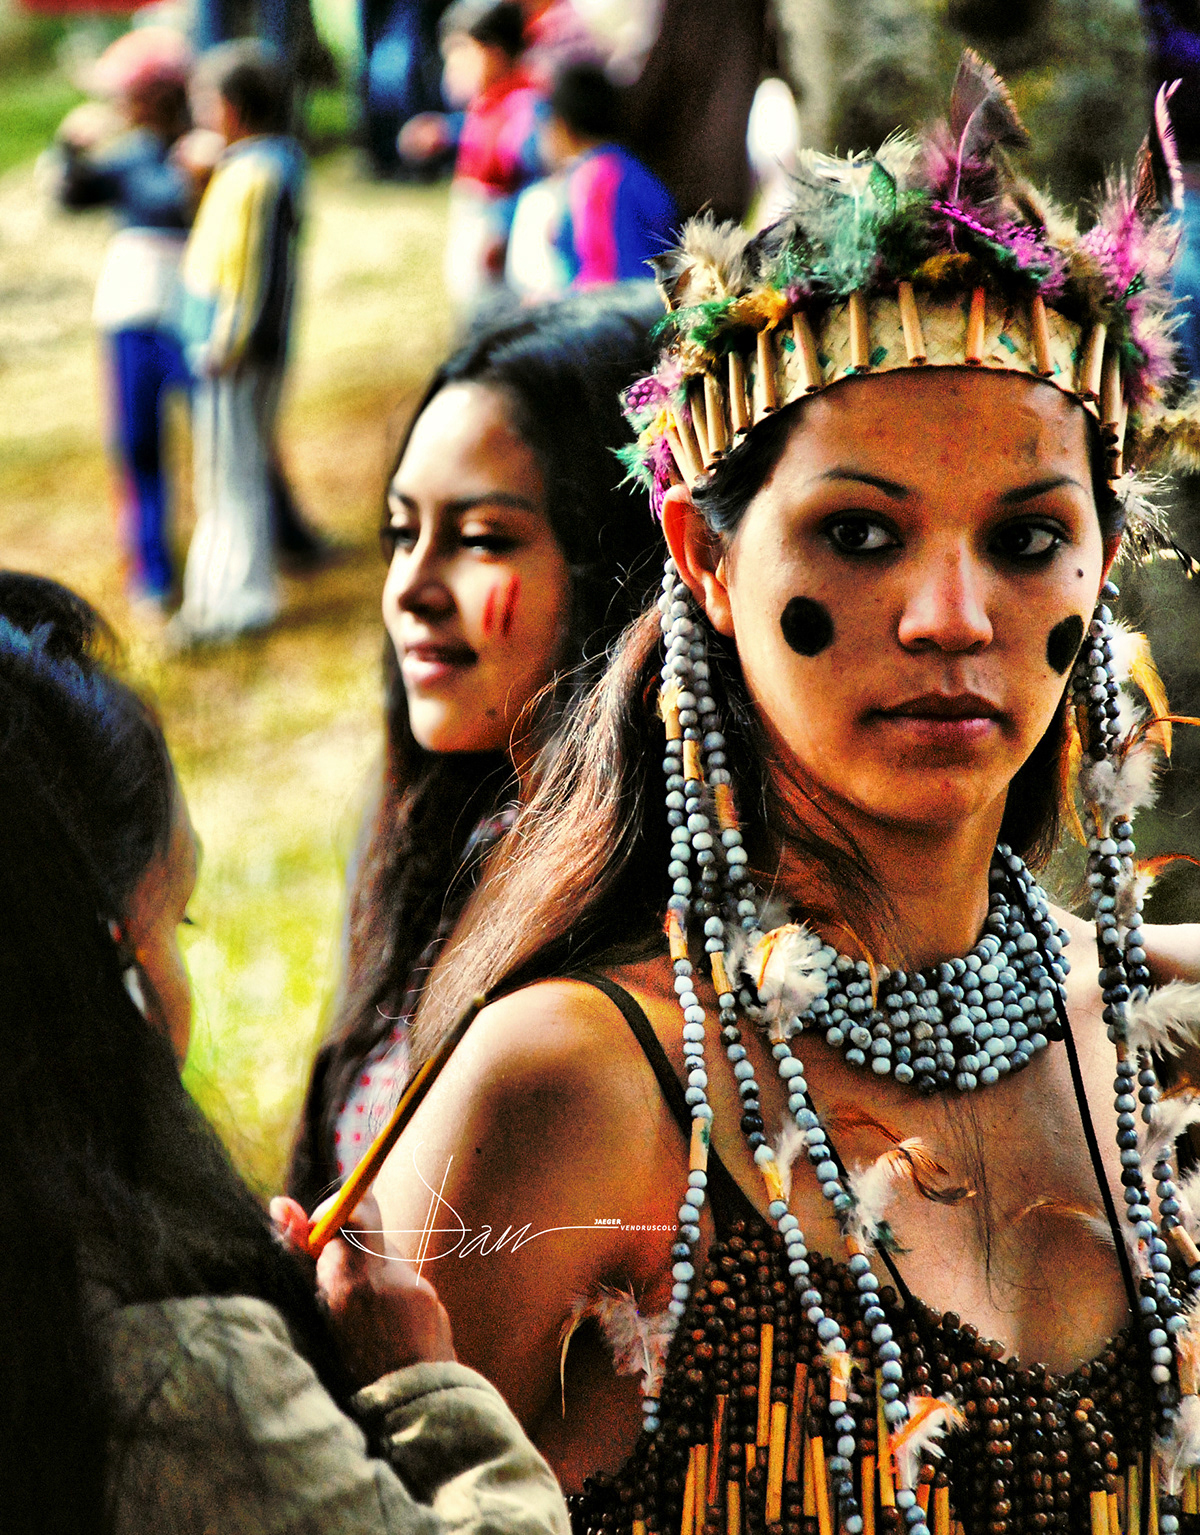 indigena indios amerindios indians indigenous Amerindians brasilian american Americans guarany guarani kaingang kahngags nativos Native social culture raças tribo